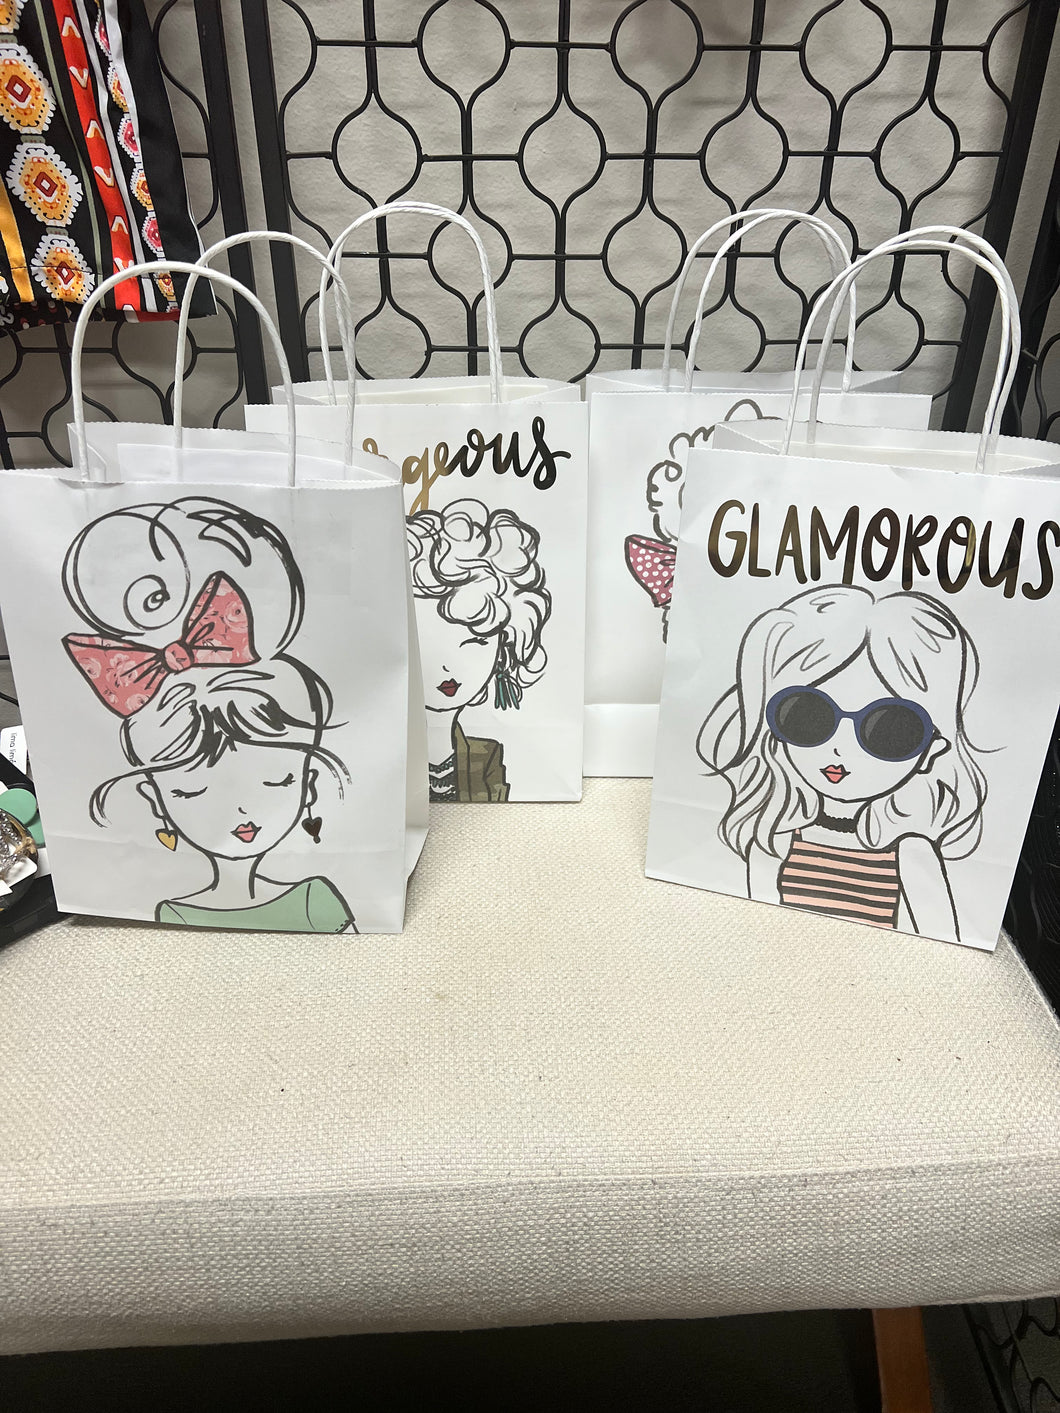 Surprise Glamorous Glam Bags!